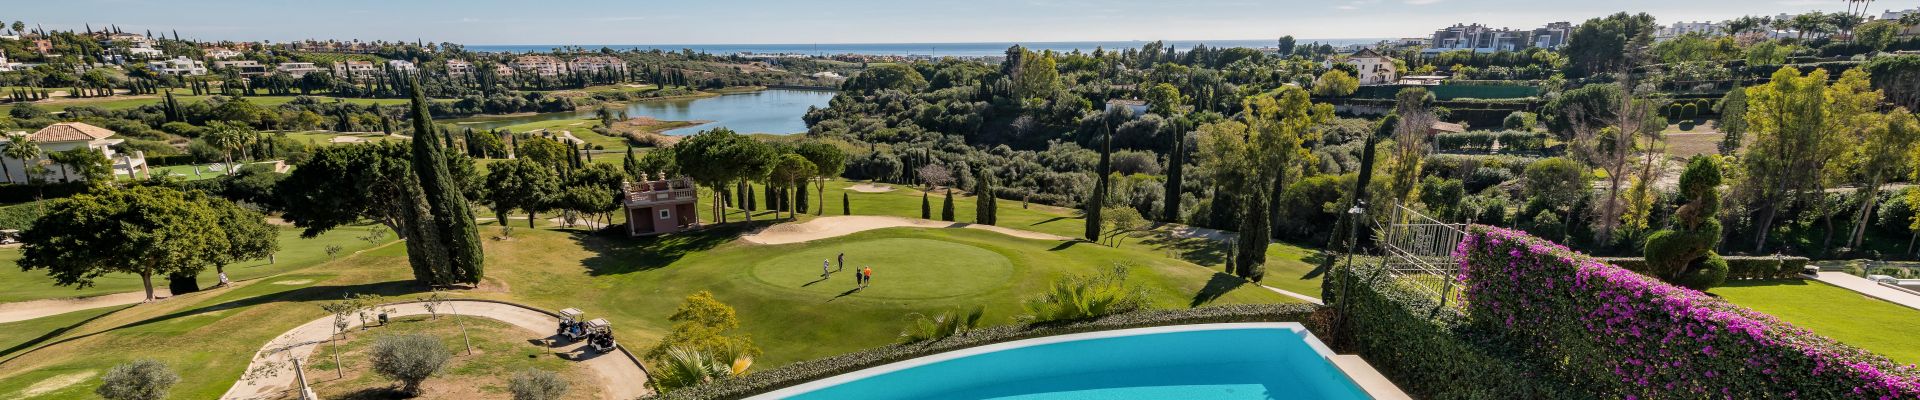 Propriétés de luxe en bord de golf à vendre à Marbella